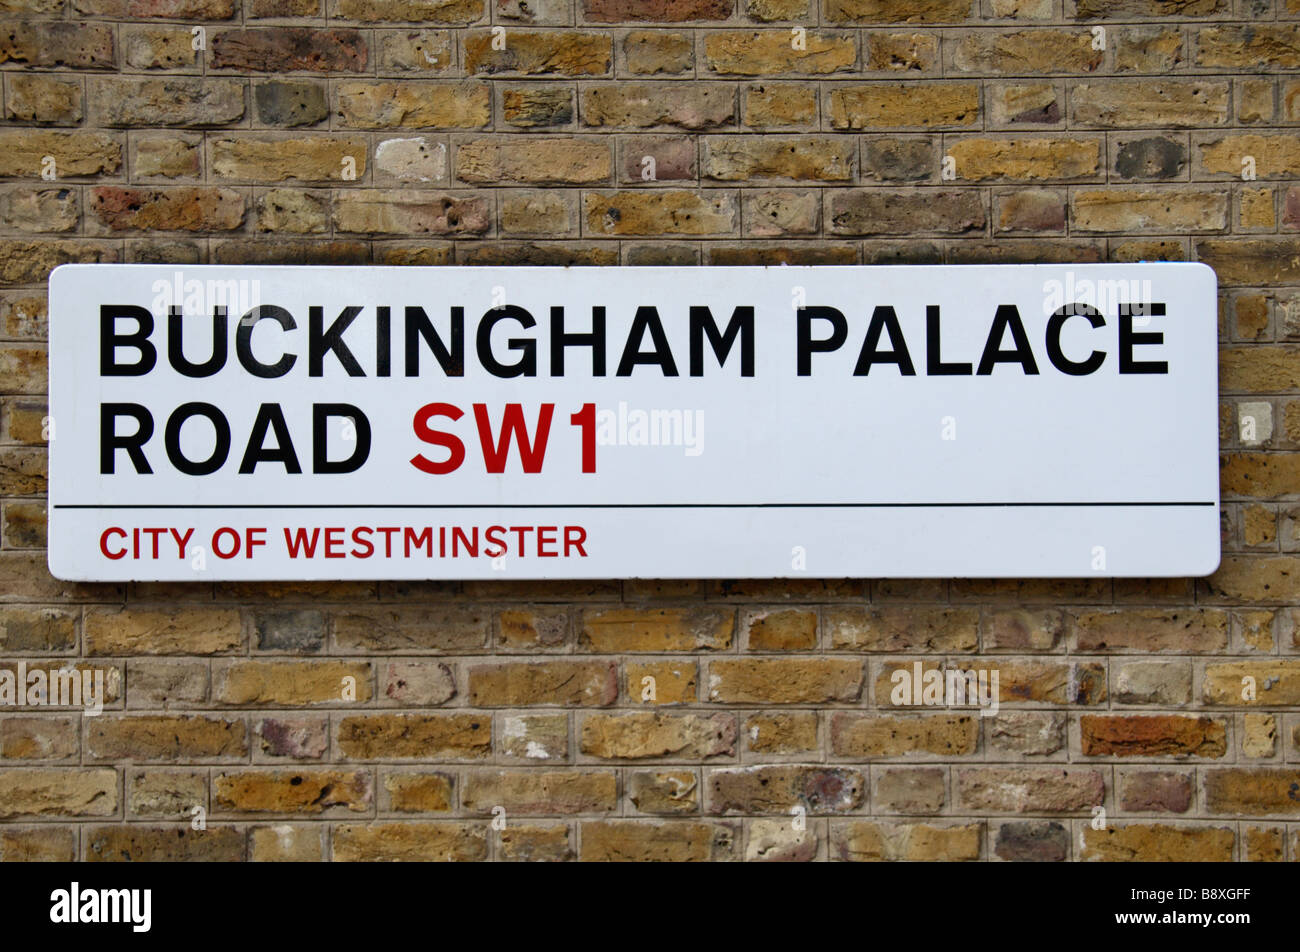 Street sign for Buckingham Palace Road, London.  Mar 2009 Stock Photo